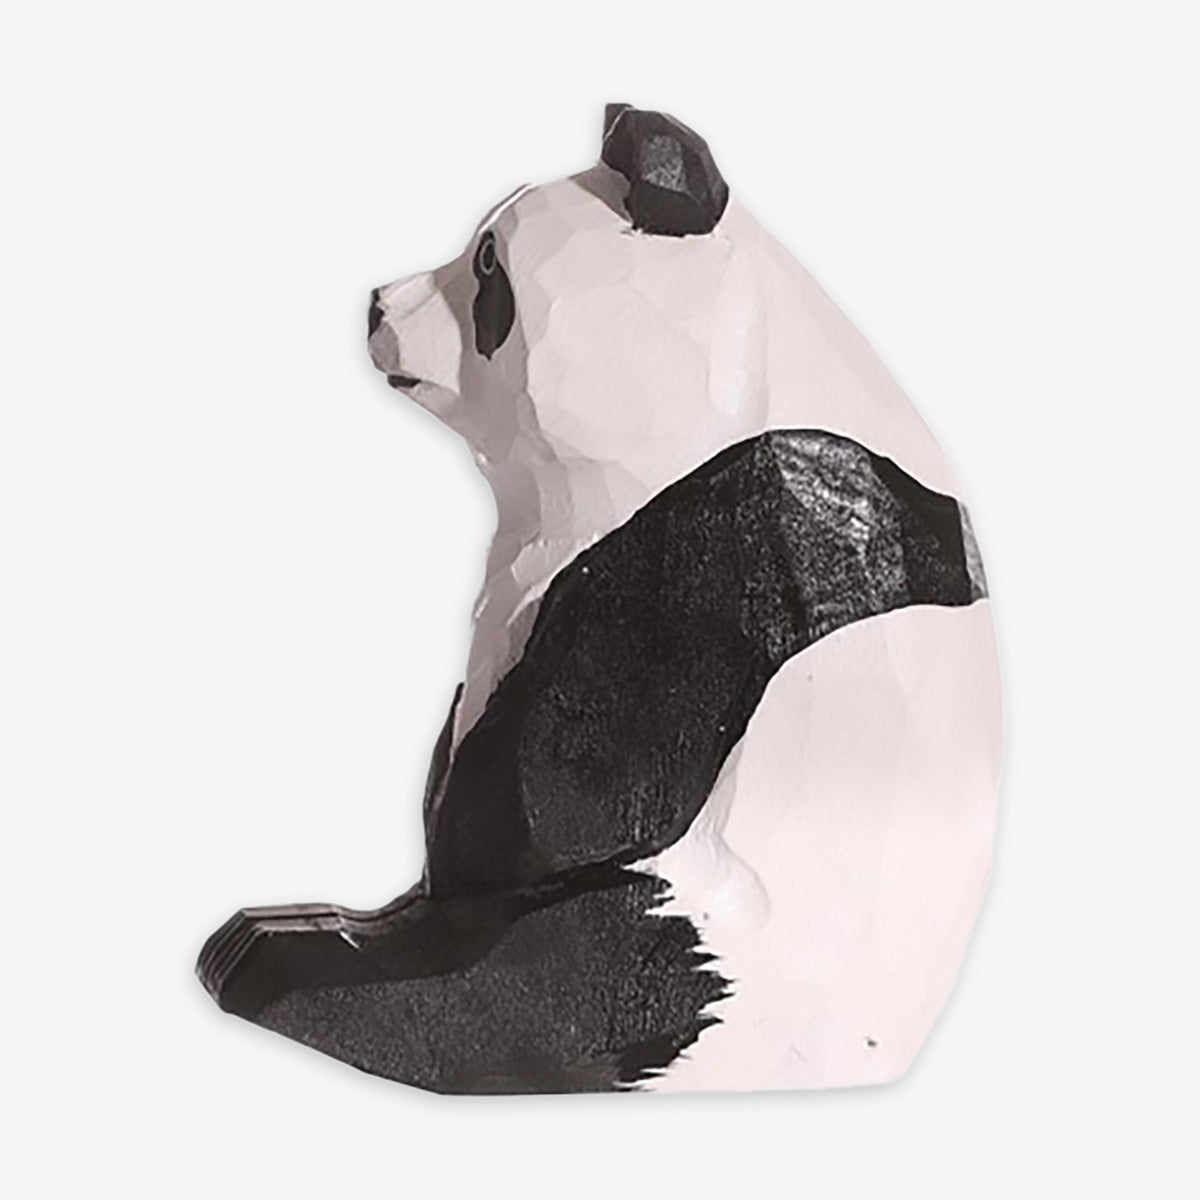 Wudimals Wooden Animal - Panda